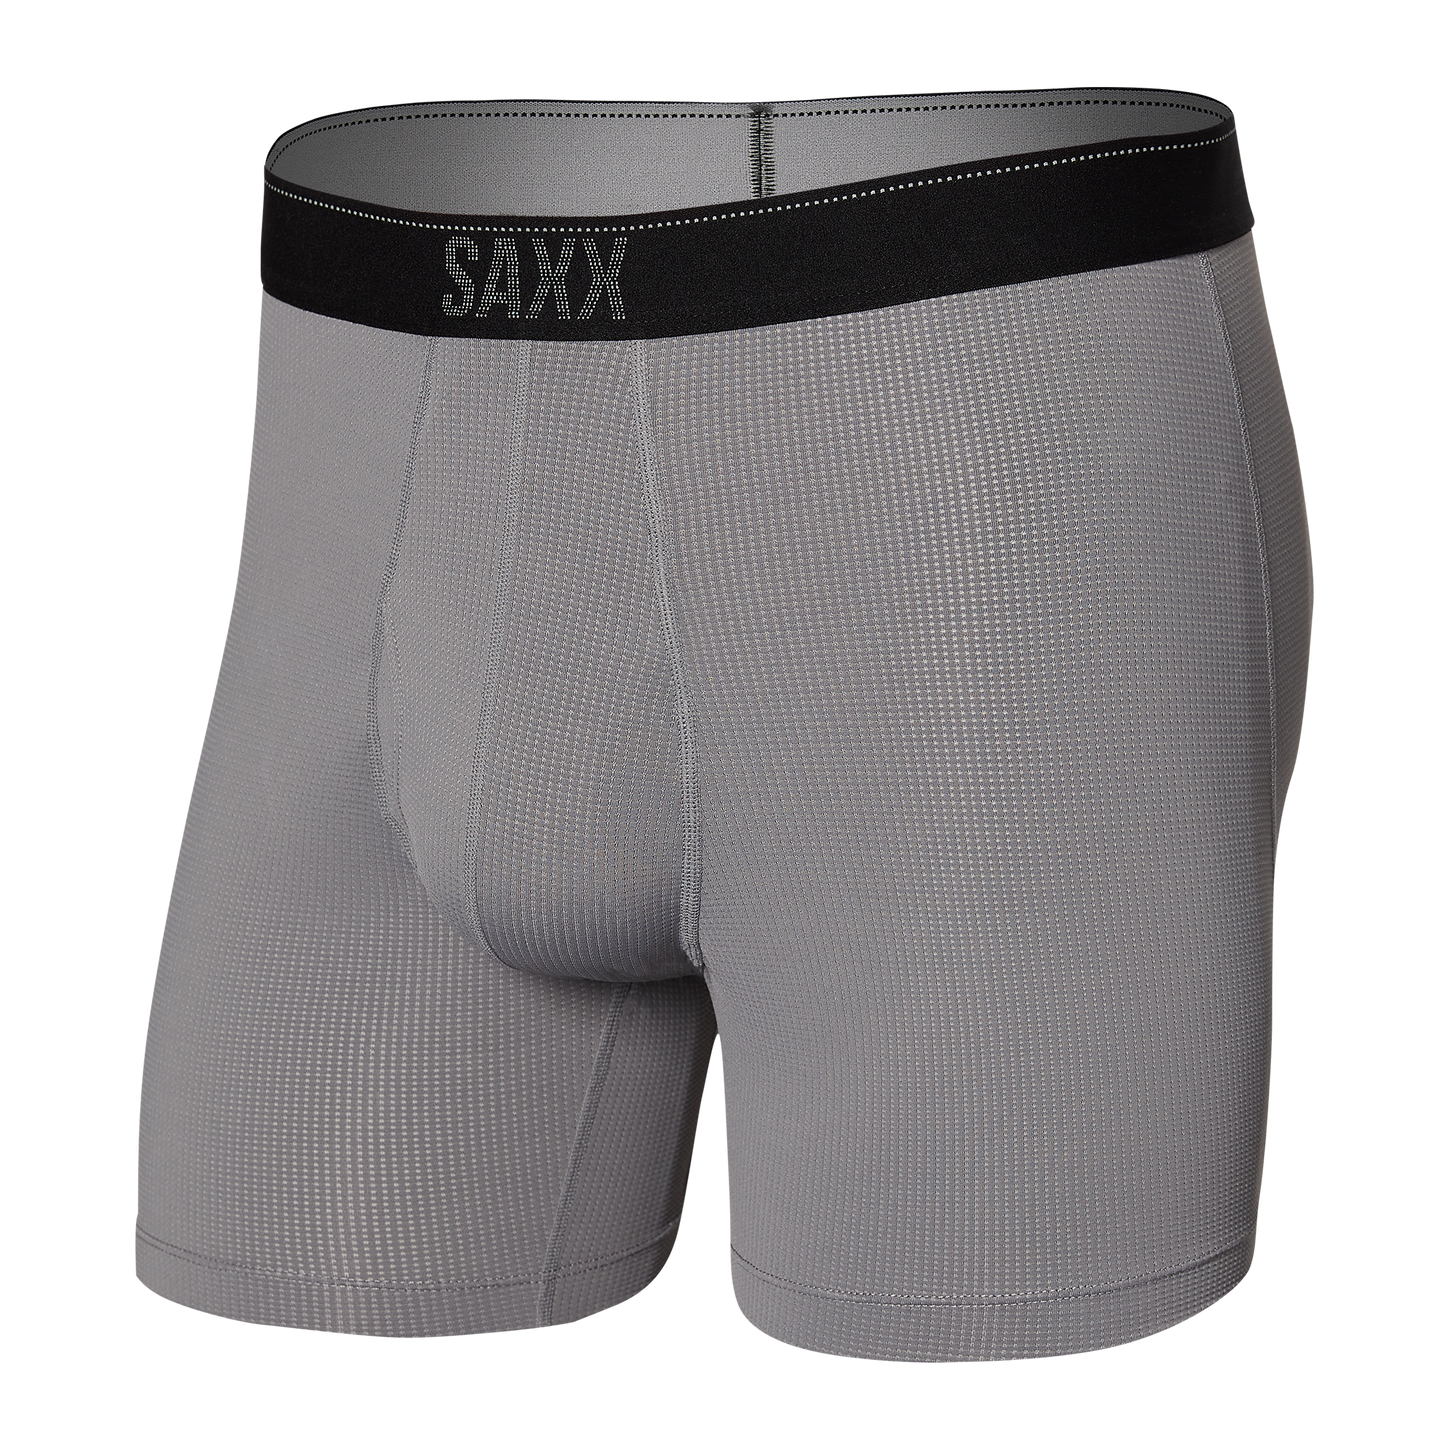 Saxx Ultra Boxer Brief-Coast Life Navy - Uplift Intimate Apparel